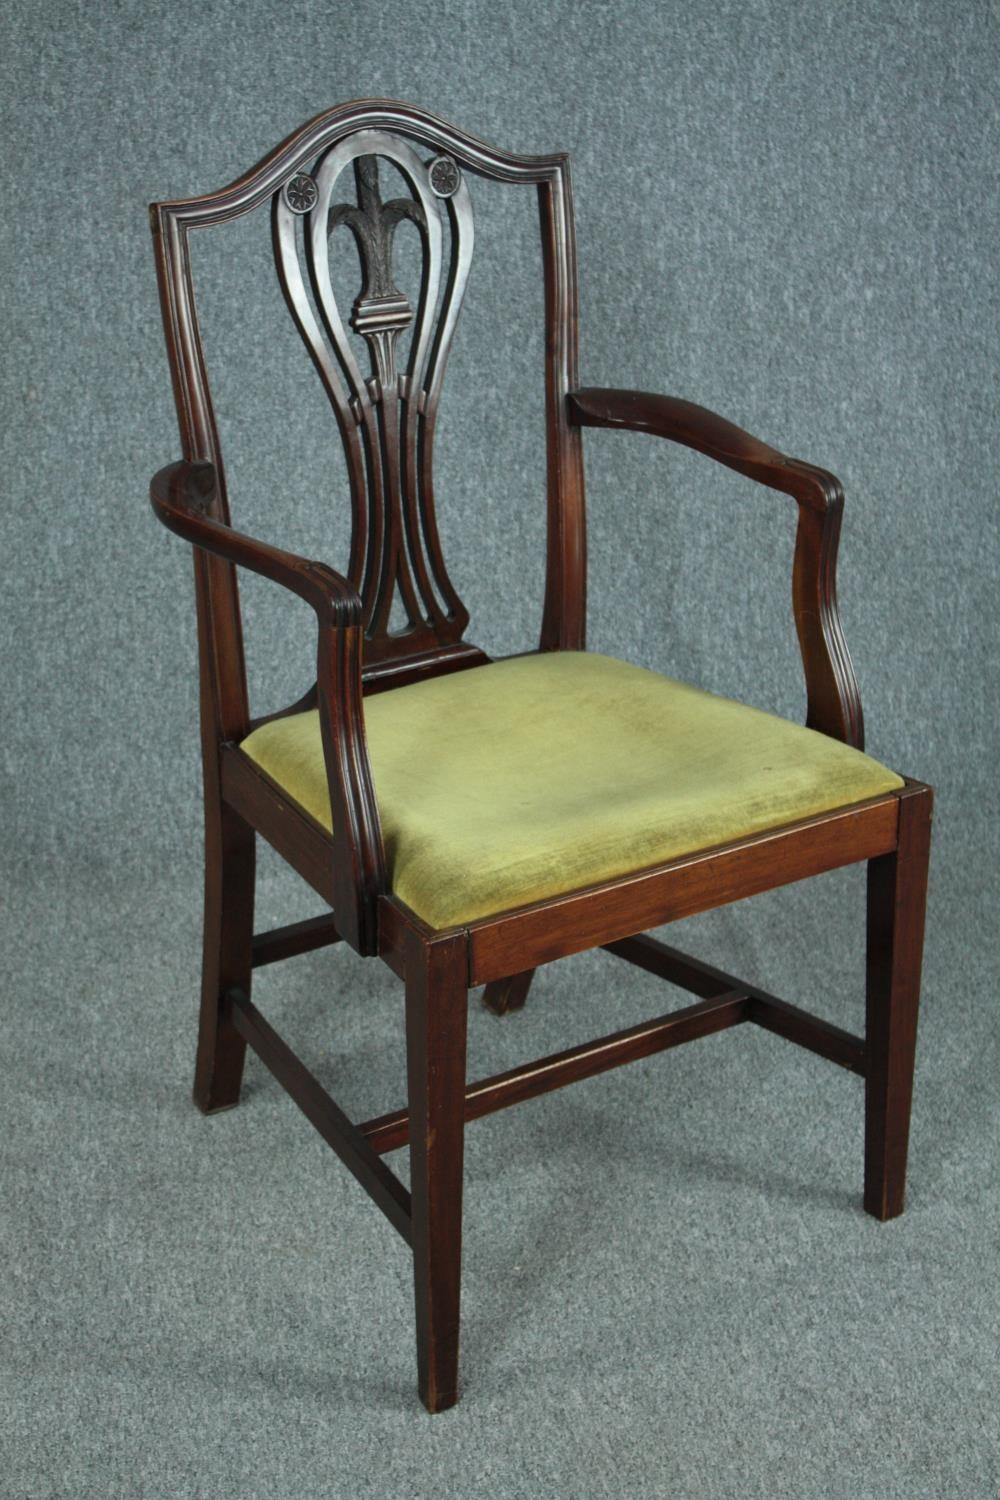 Armchair, 19th century mahogany. - Image 2 of 6